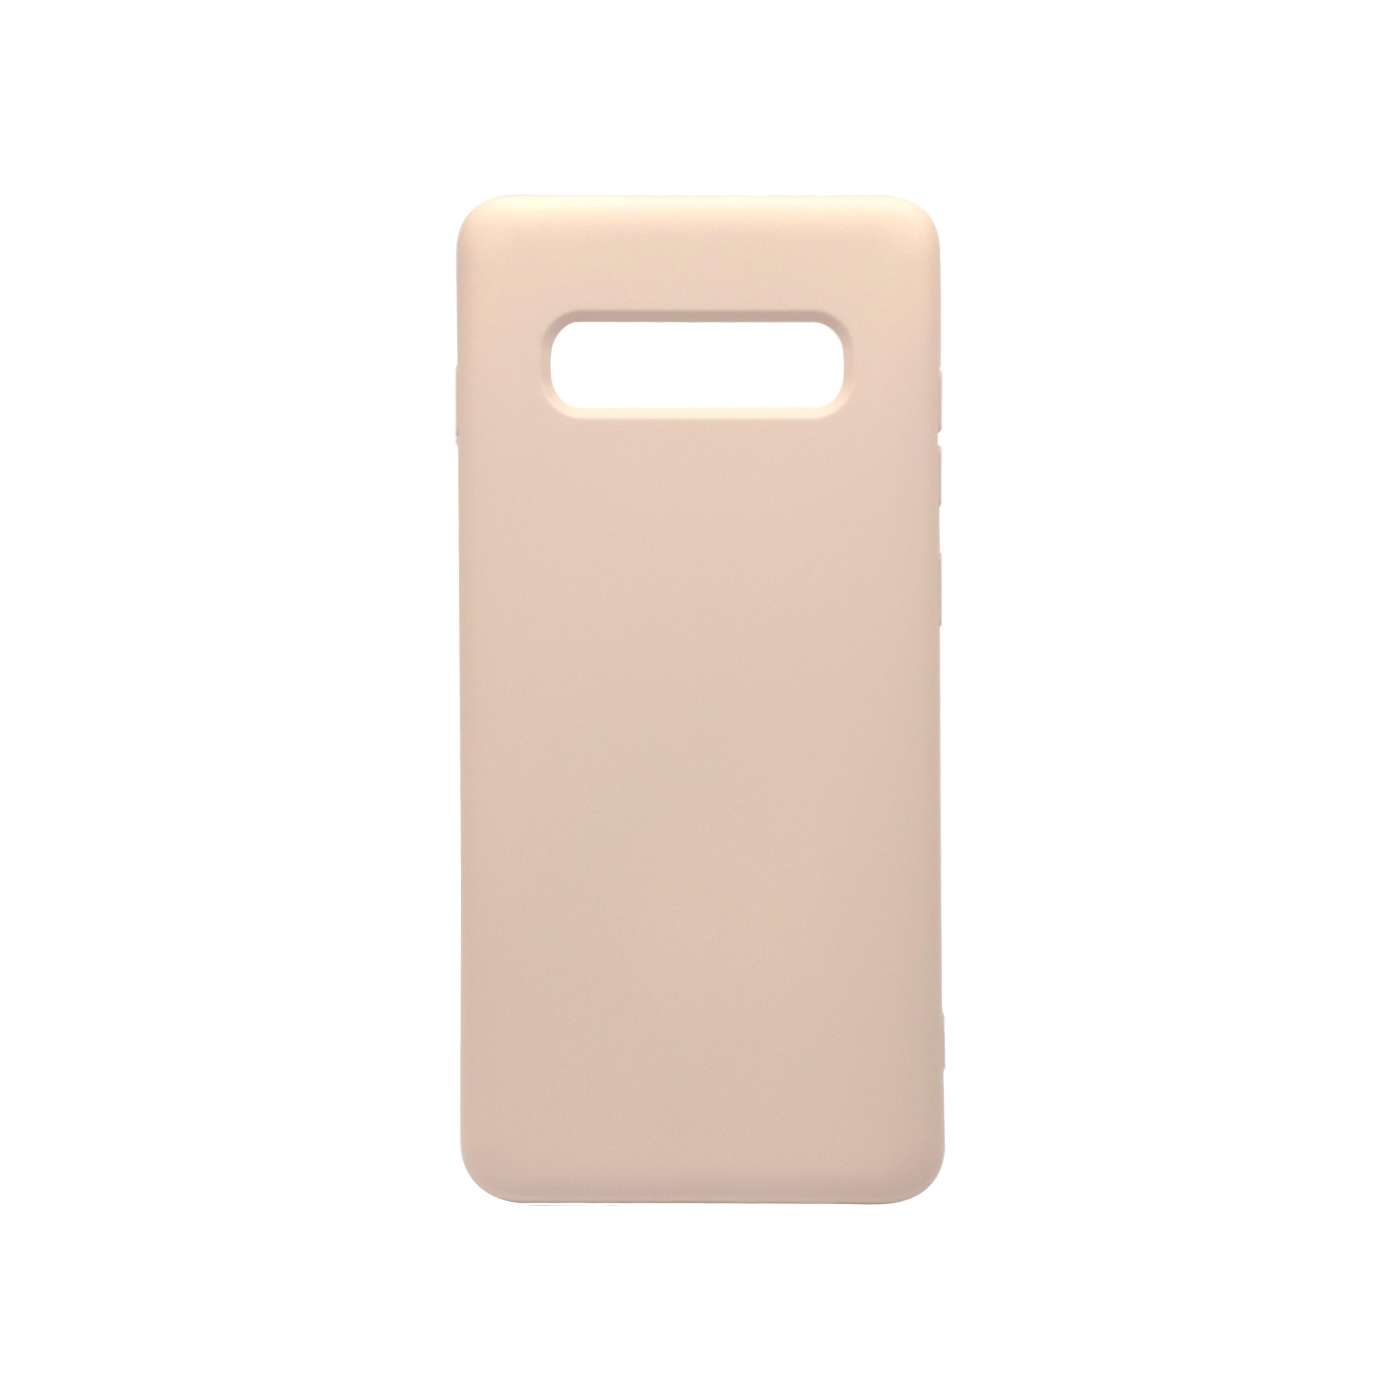 Futrola SOFT CASE za Samsung S10 Plus/G975 puder roze